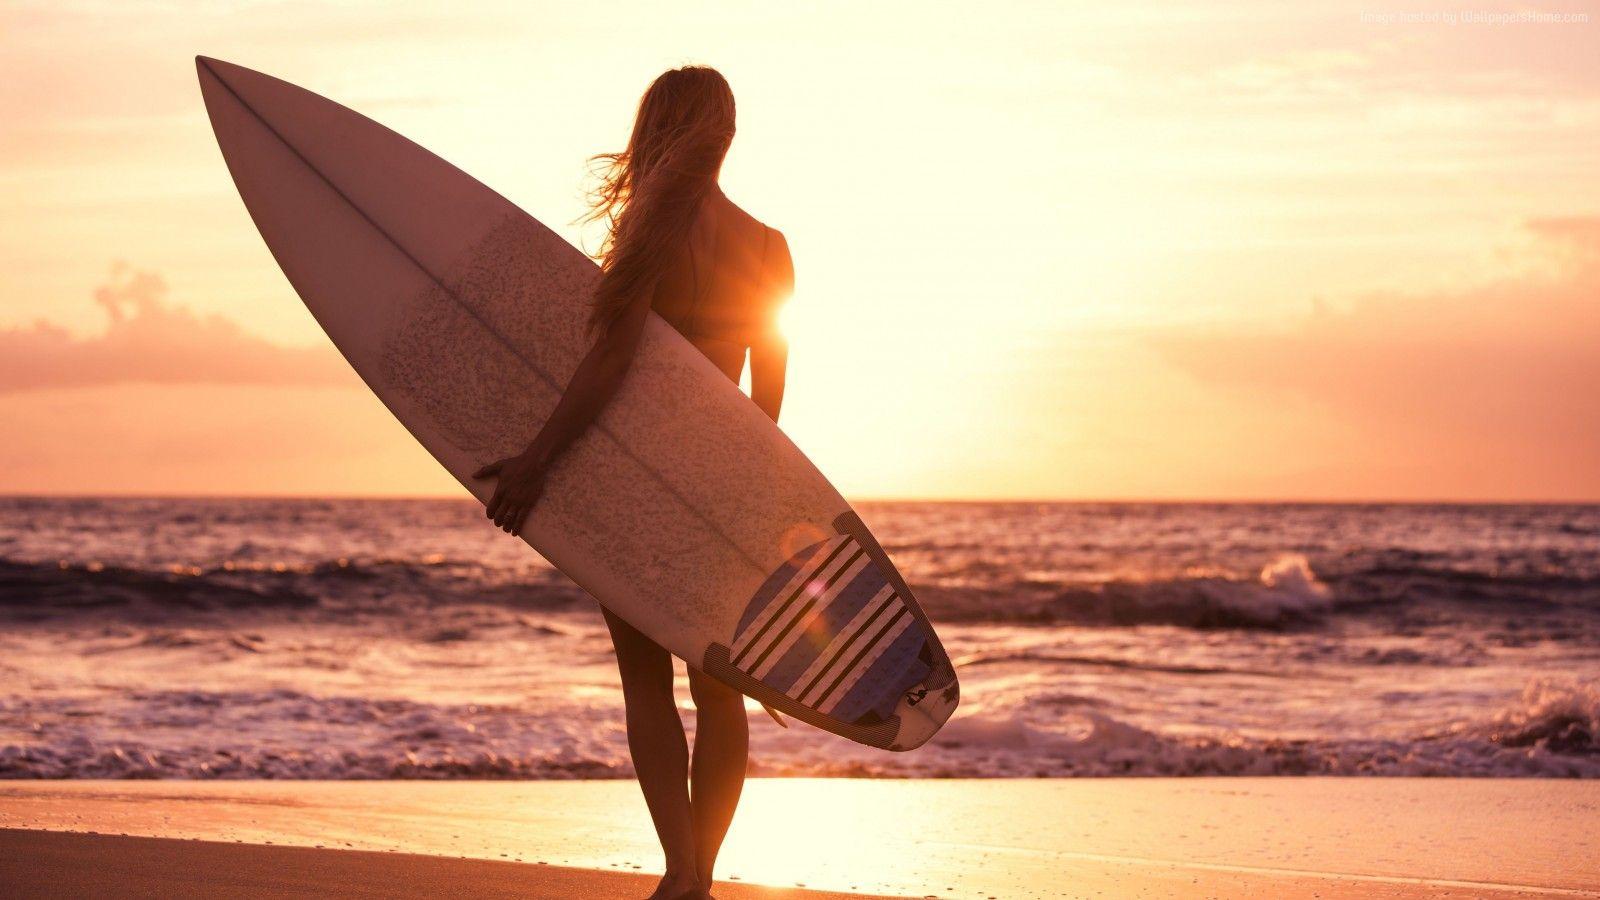 Surfing HD Desktop Wallpaper, Instagram photo, Background Image